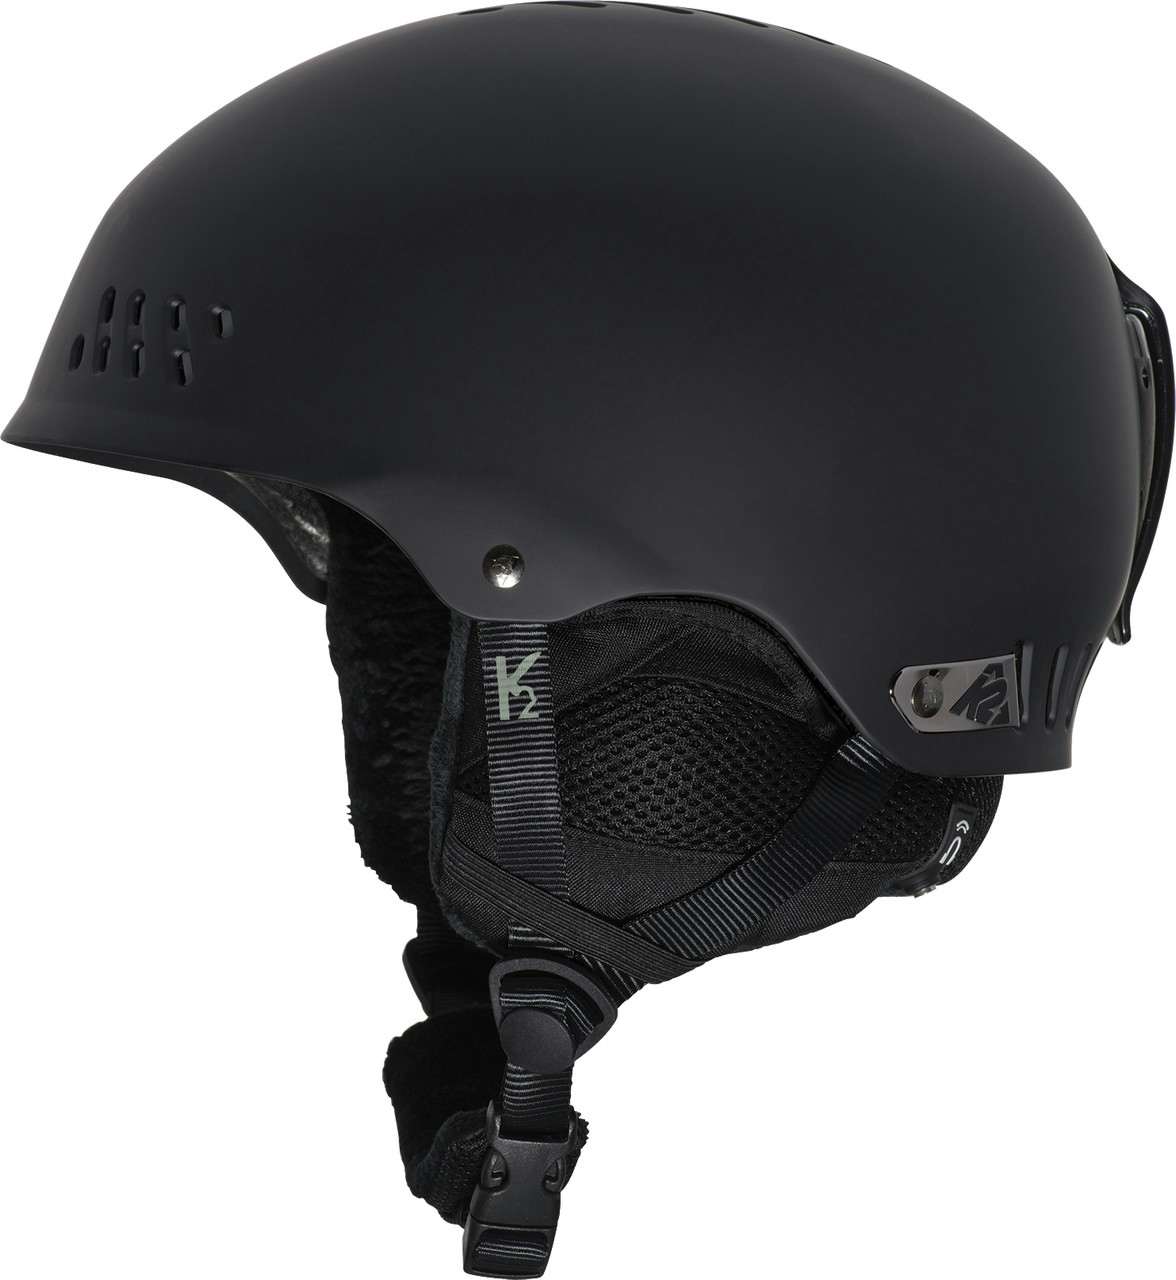 Phase Pro Helmet Black